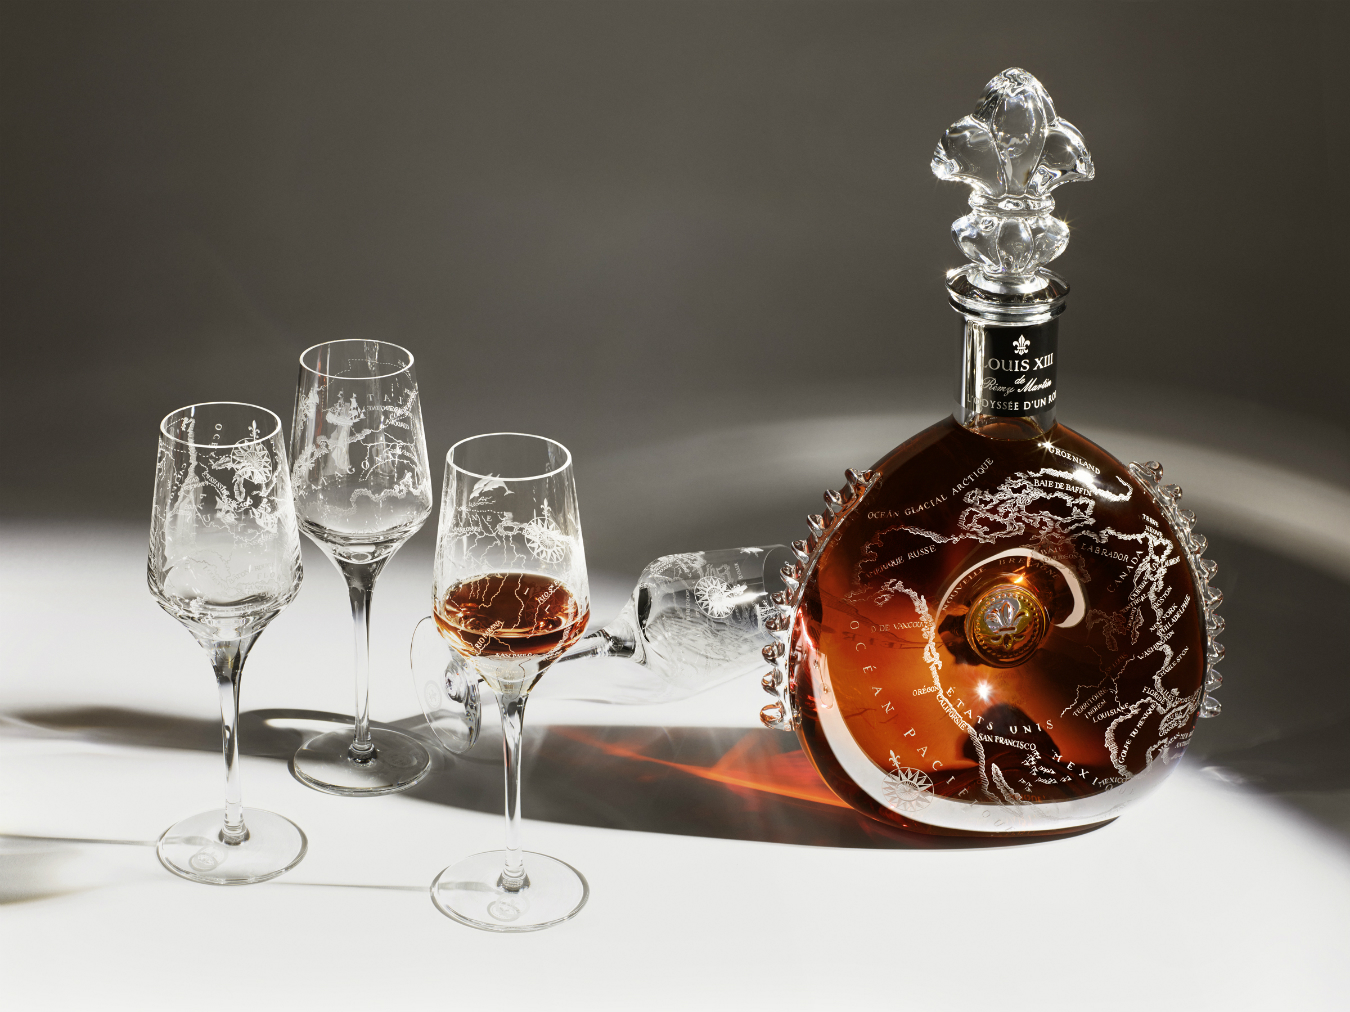 Remy Martin Louis XIII Cognac - Iconic Cognac